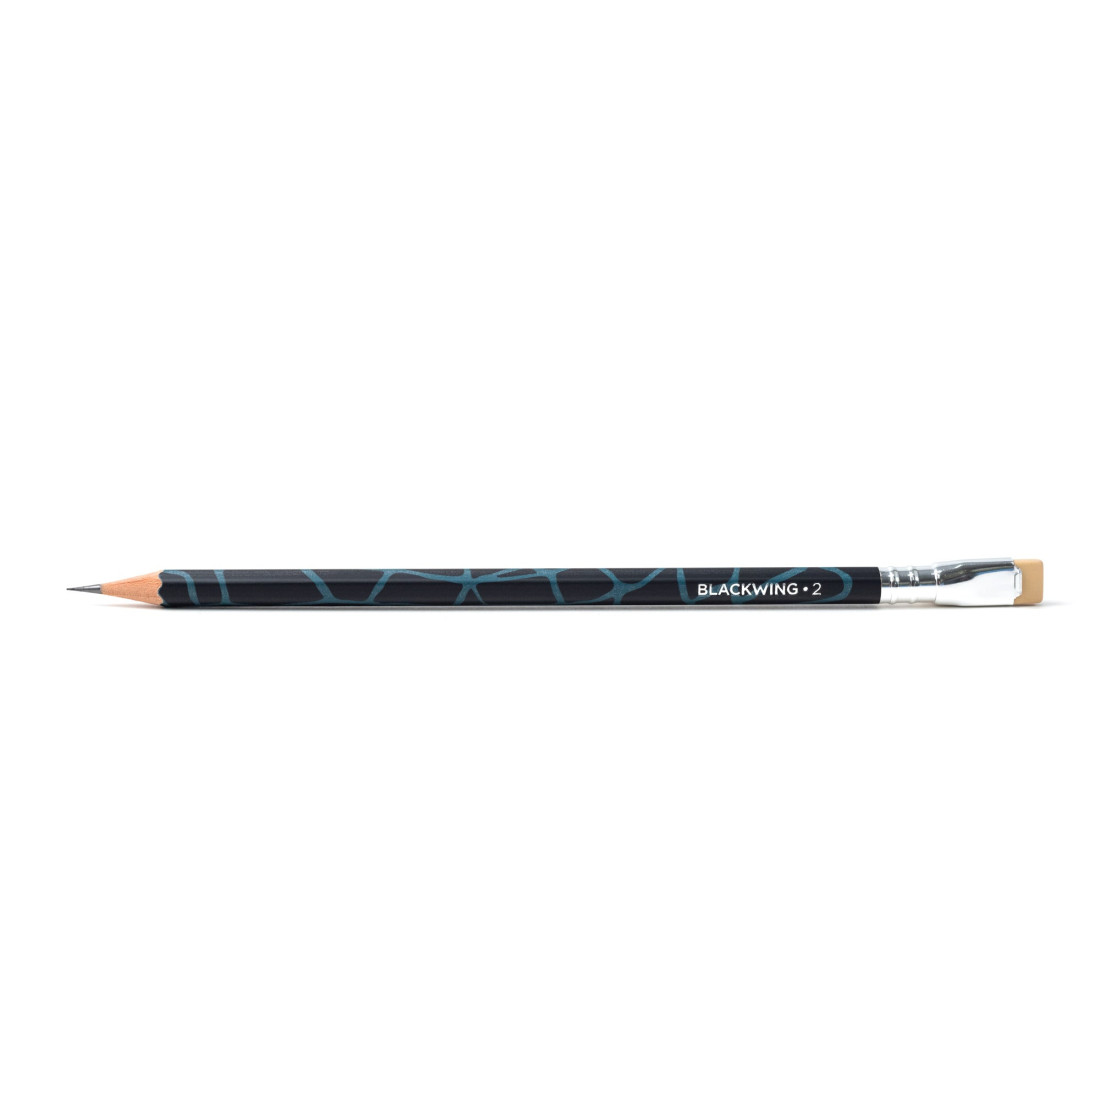 Palomino Blackwing Vol. 2, The Light & Dark pencils, set of 12